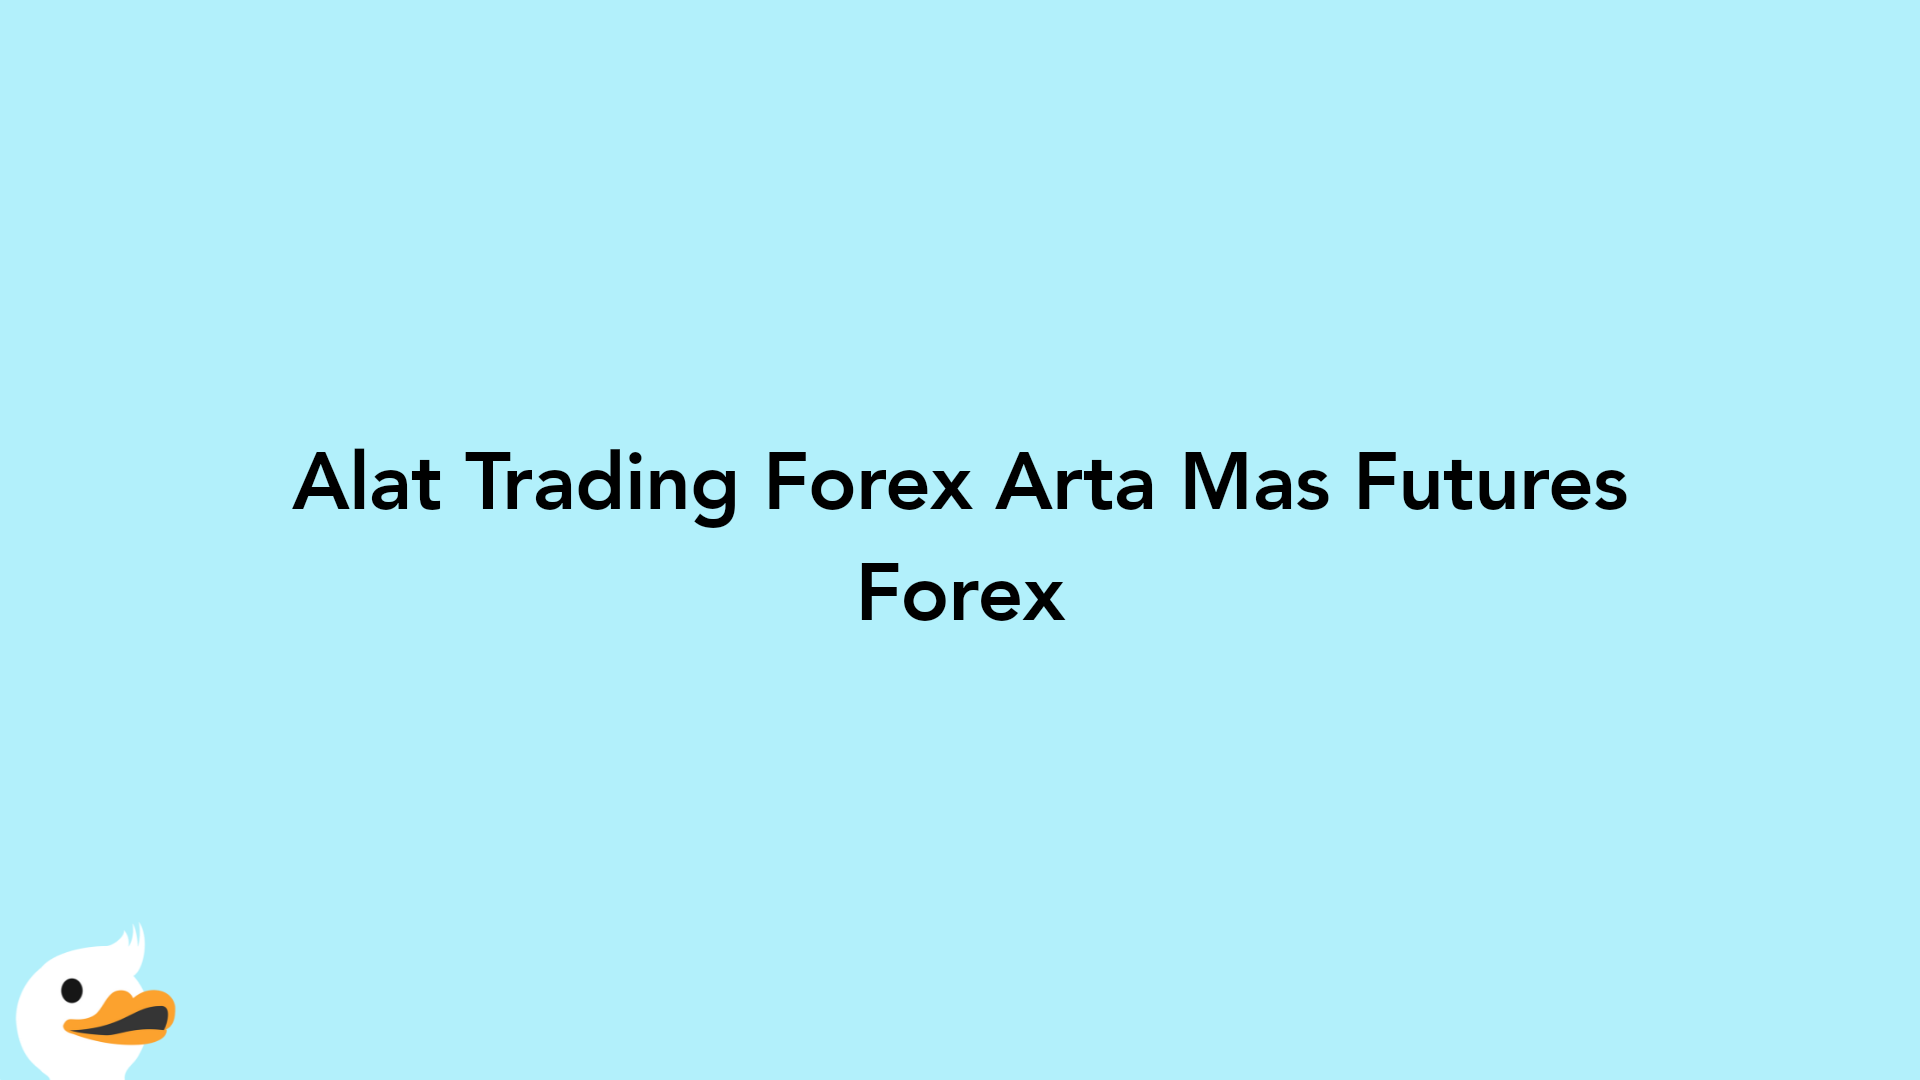 Alat Trading Forex Arta Mas Futures Forex